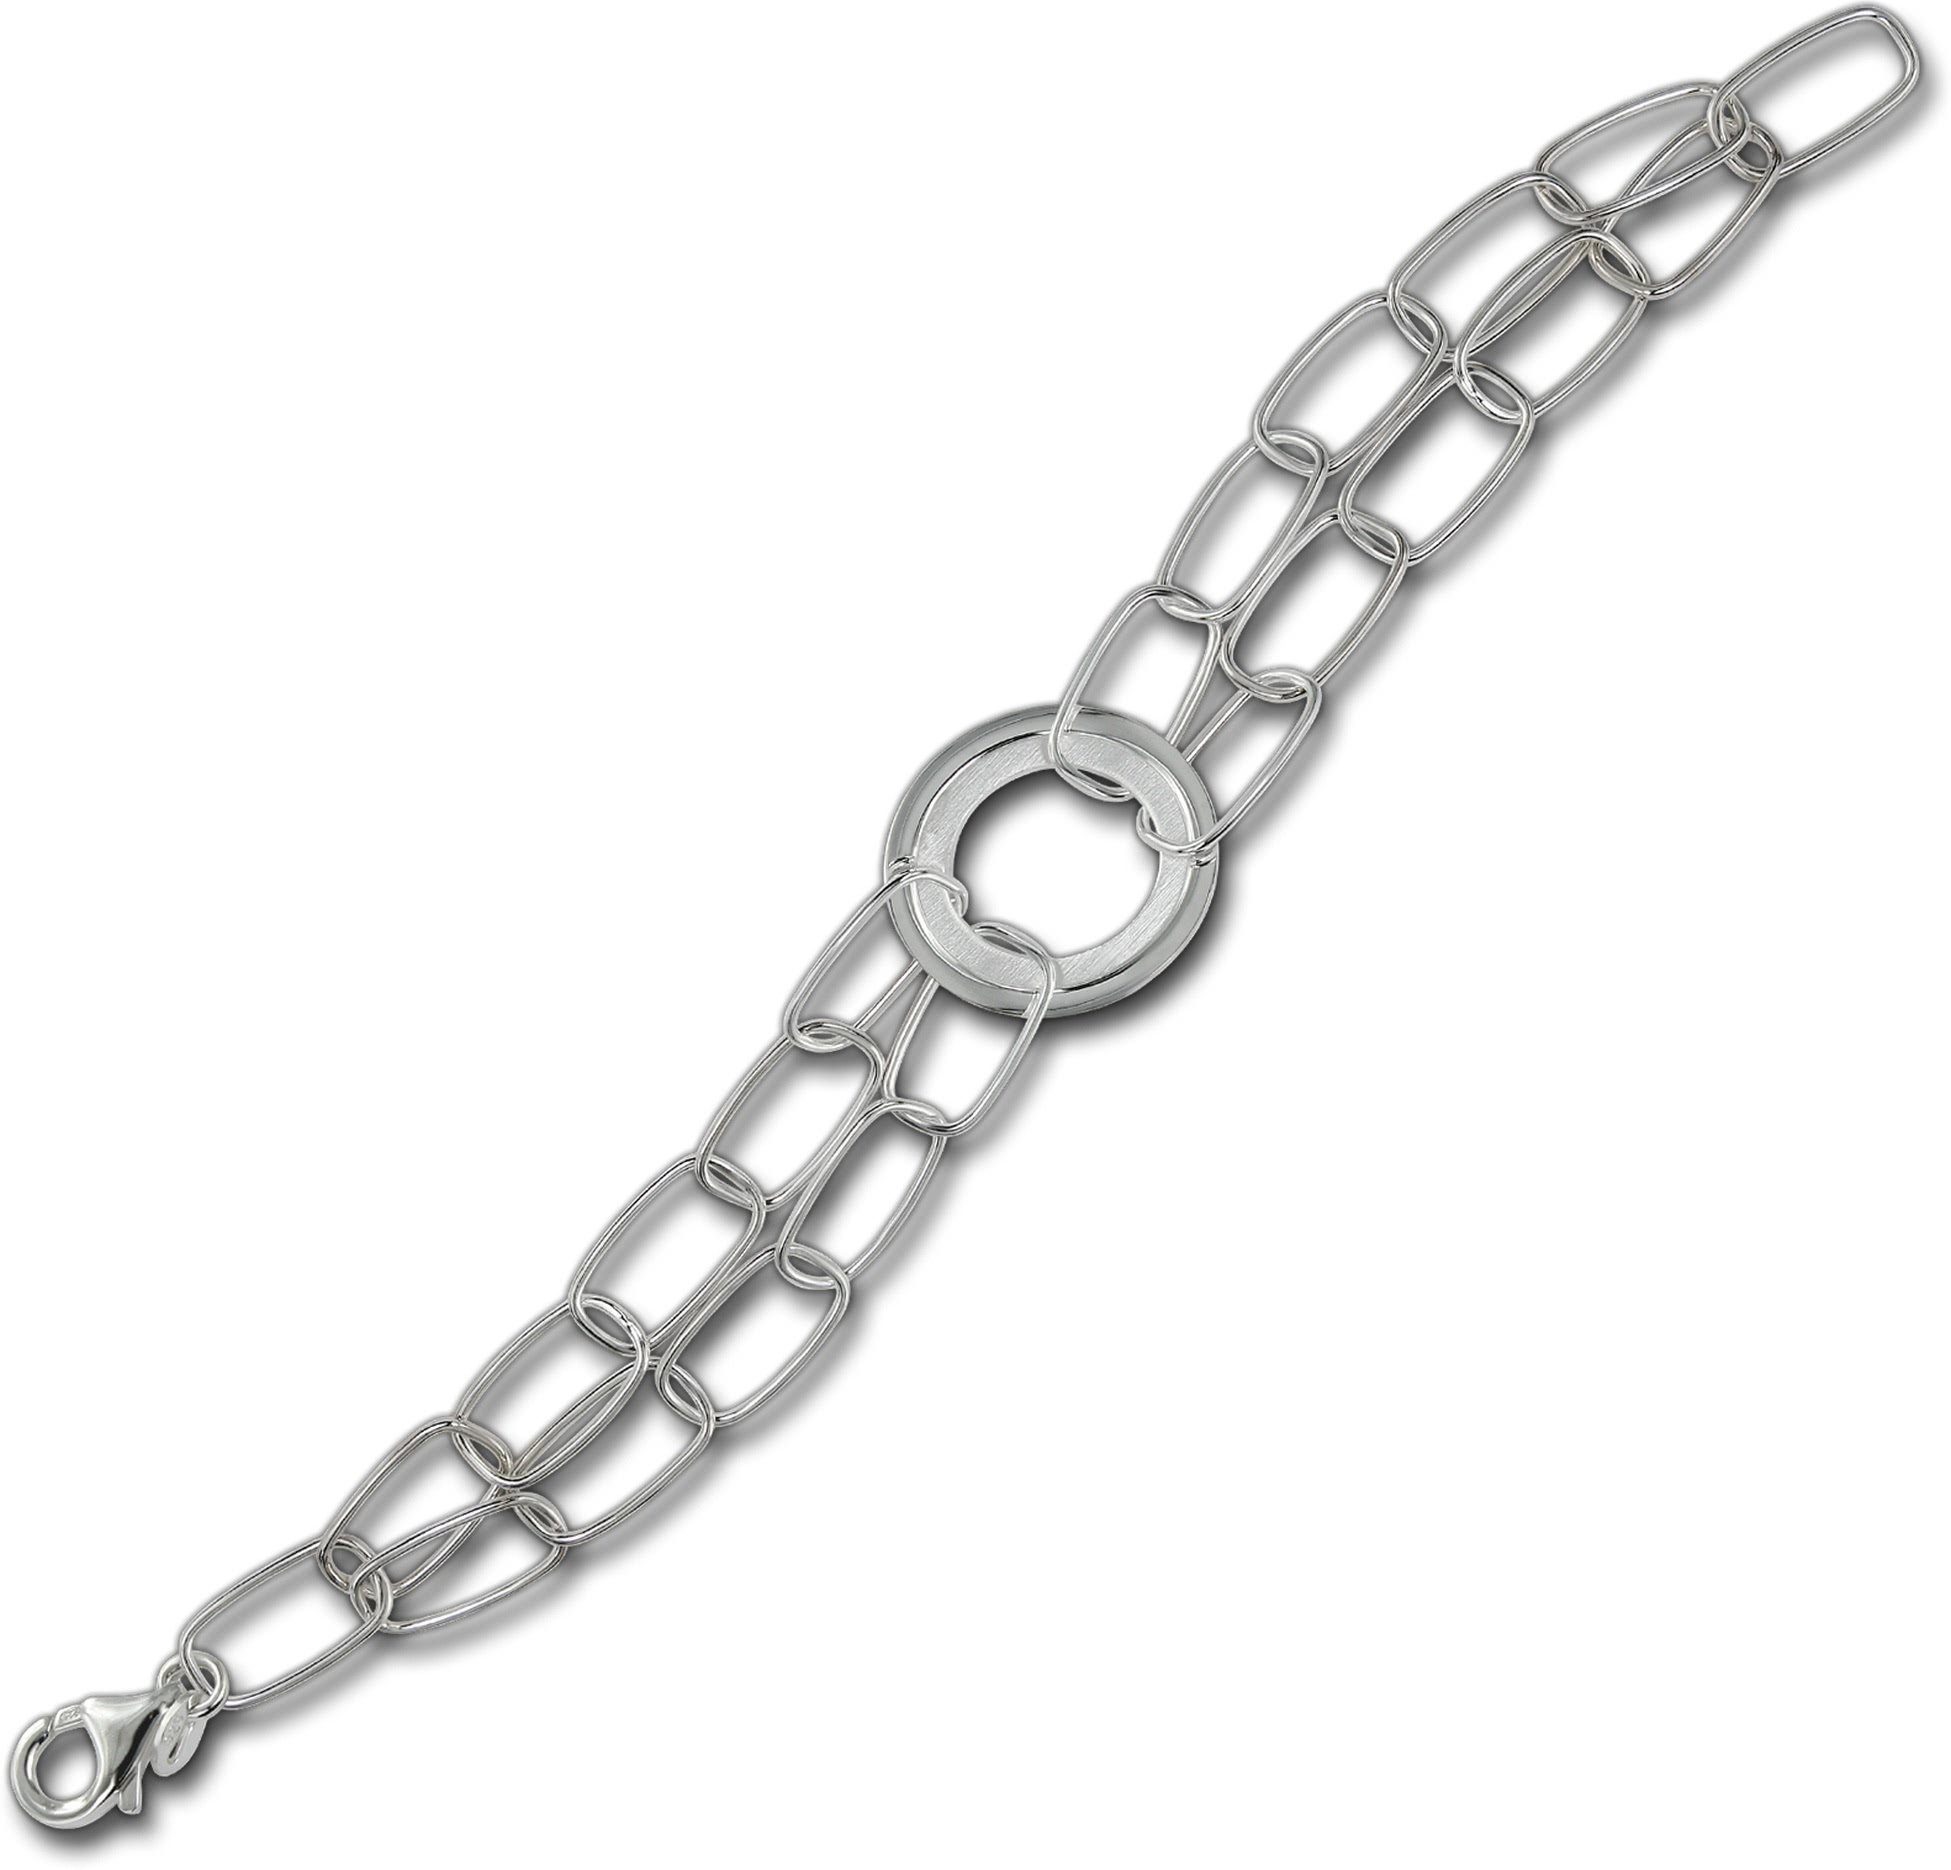 Balia Silberarmband Silber (Ringe) Balia (Armband), Silber 925 Damen ca. 18,5cm, Silber 925 matt Armband Armband